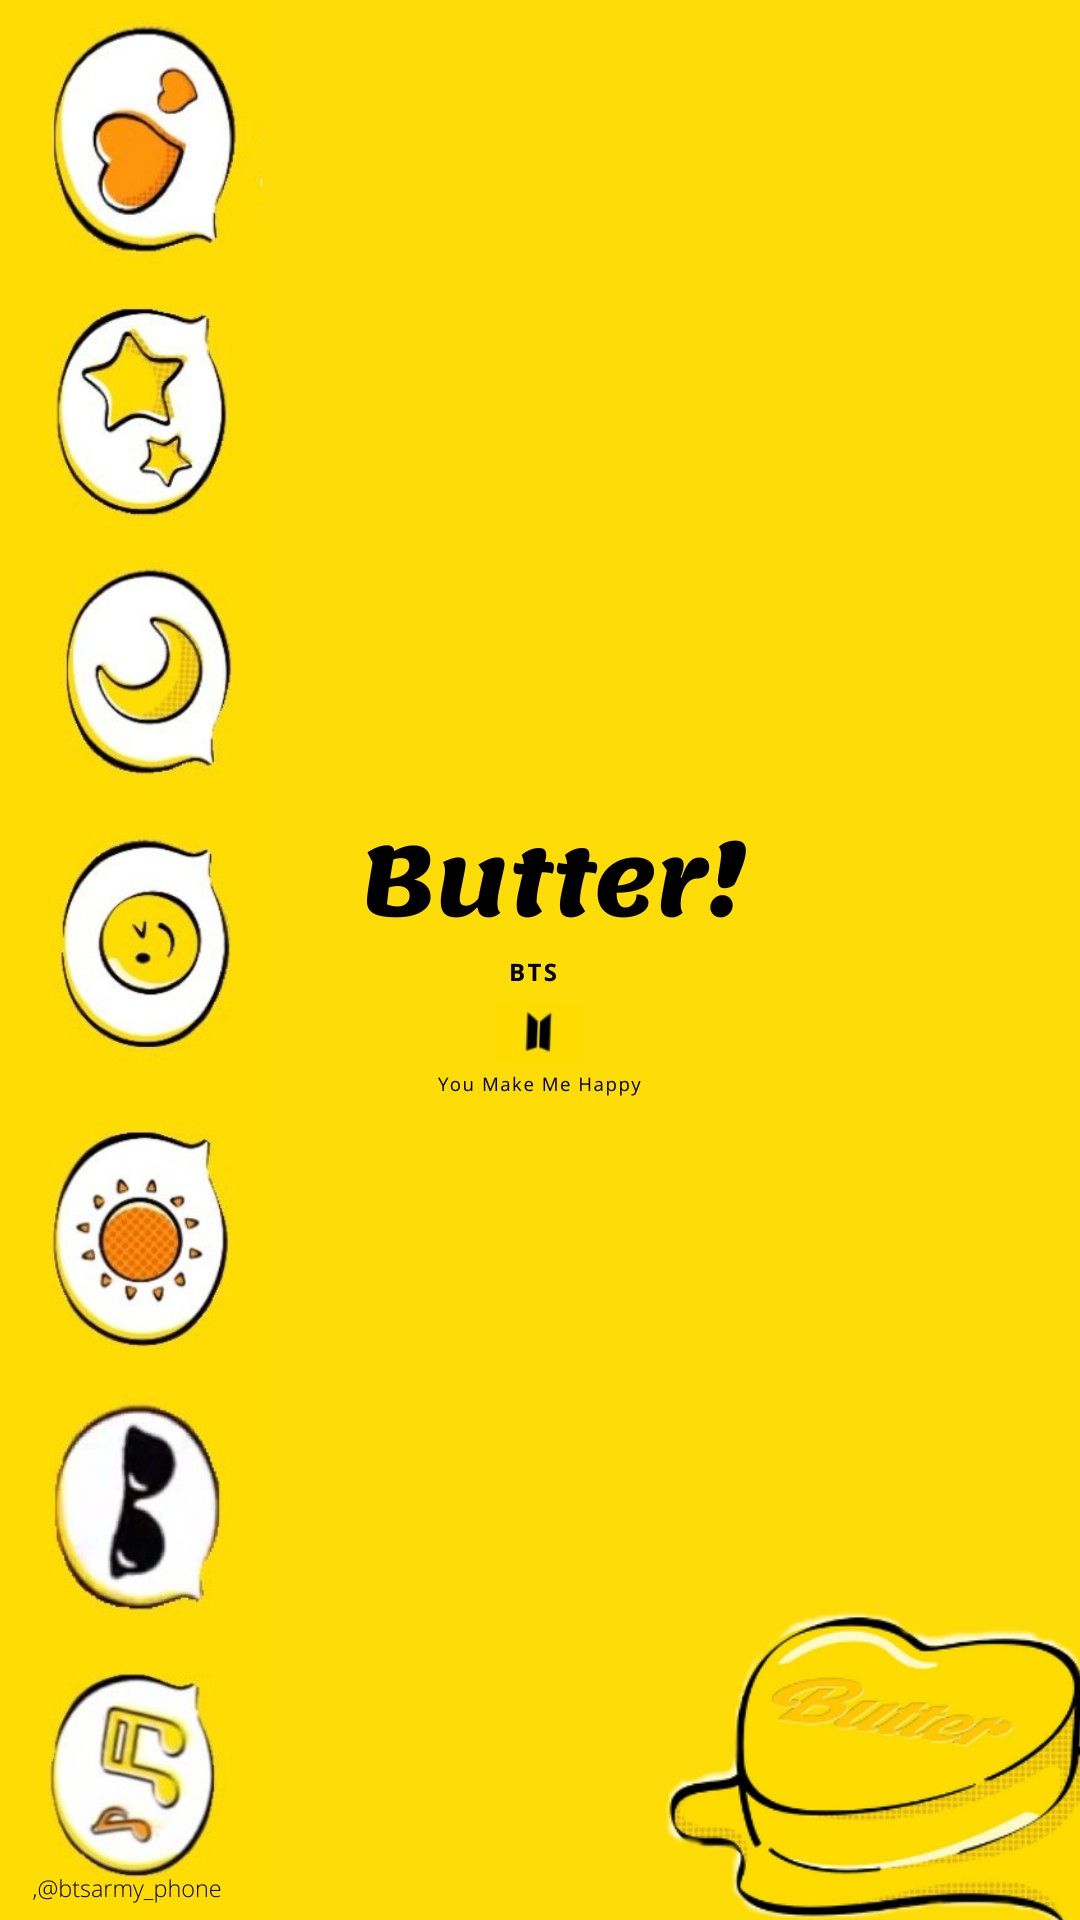 BTS butter wallpaper di 2021. Desain powerpoint, Foto grup bts, Seni